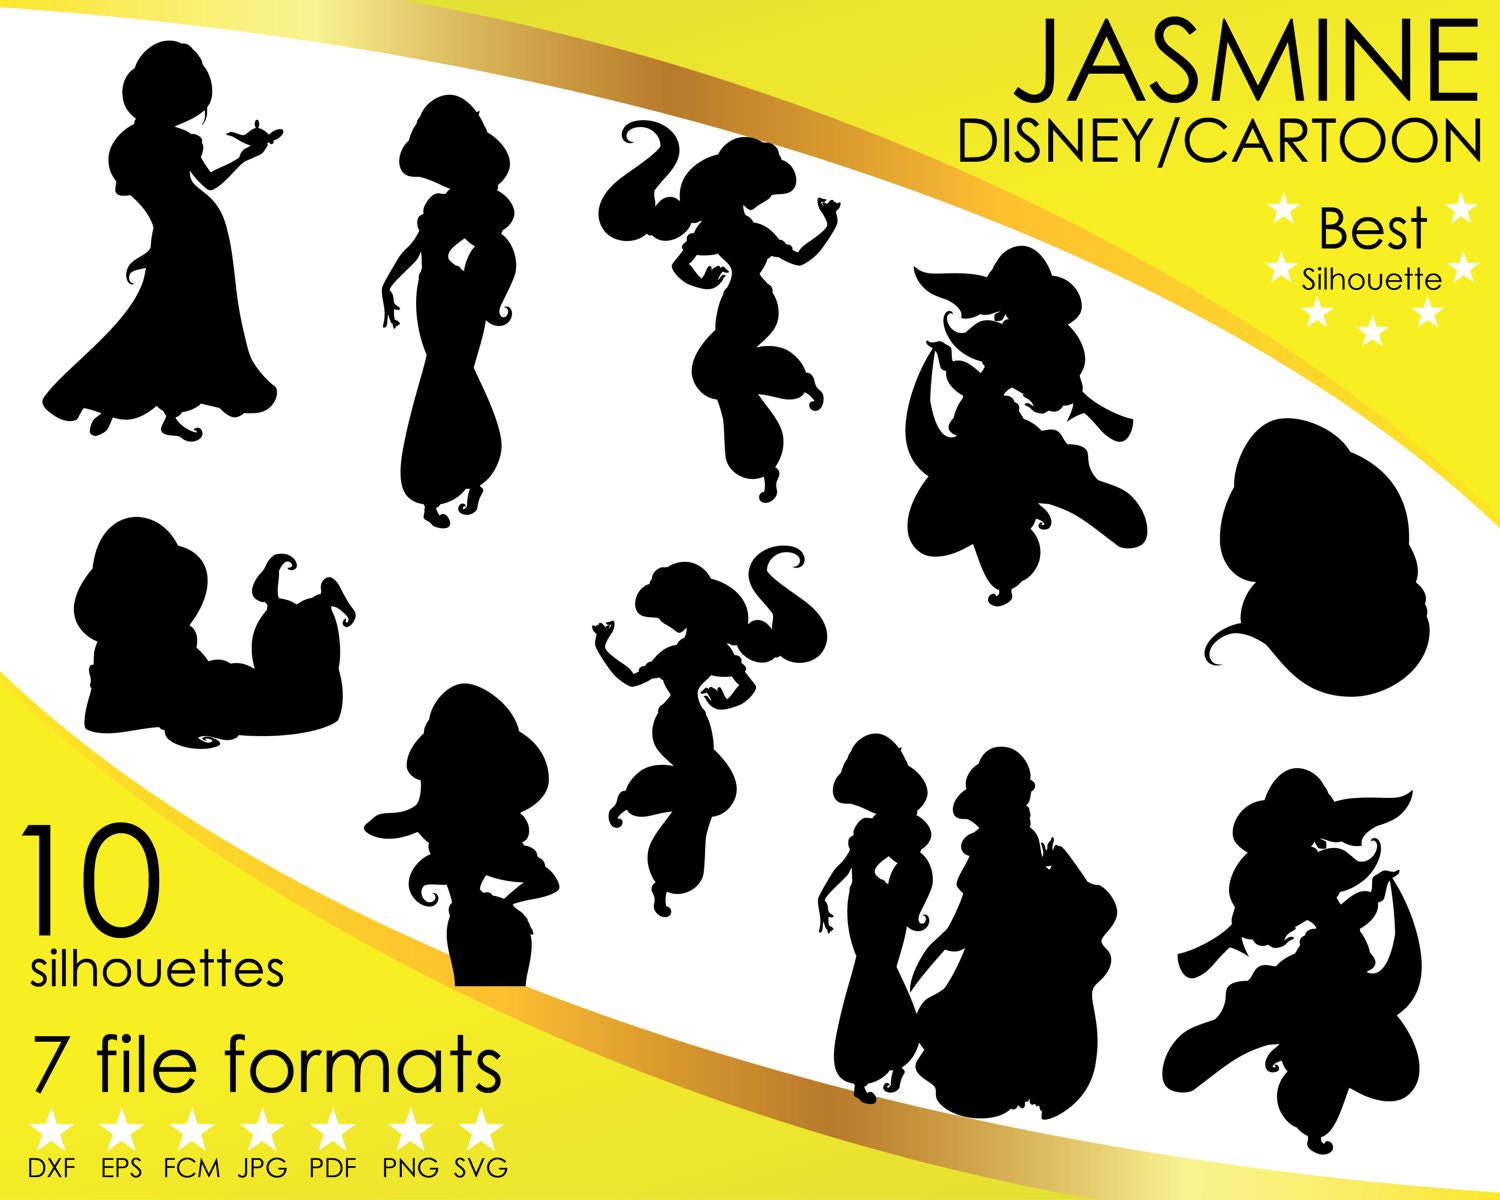 Download 10 Silhouettes Jasmine Aladdin Princess Disney Cartoon